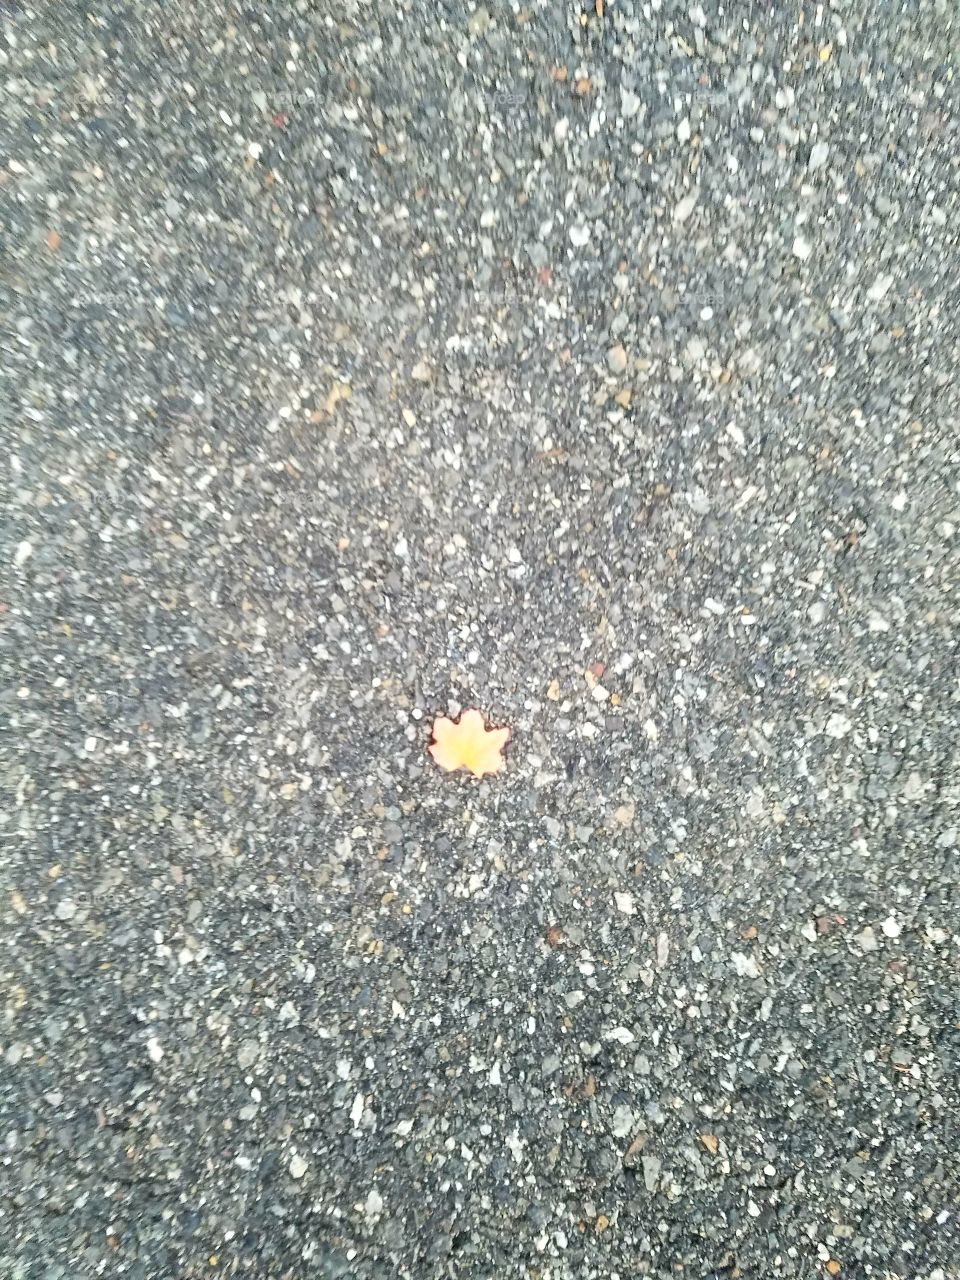 Leaf on the gravel